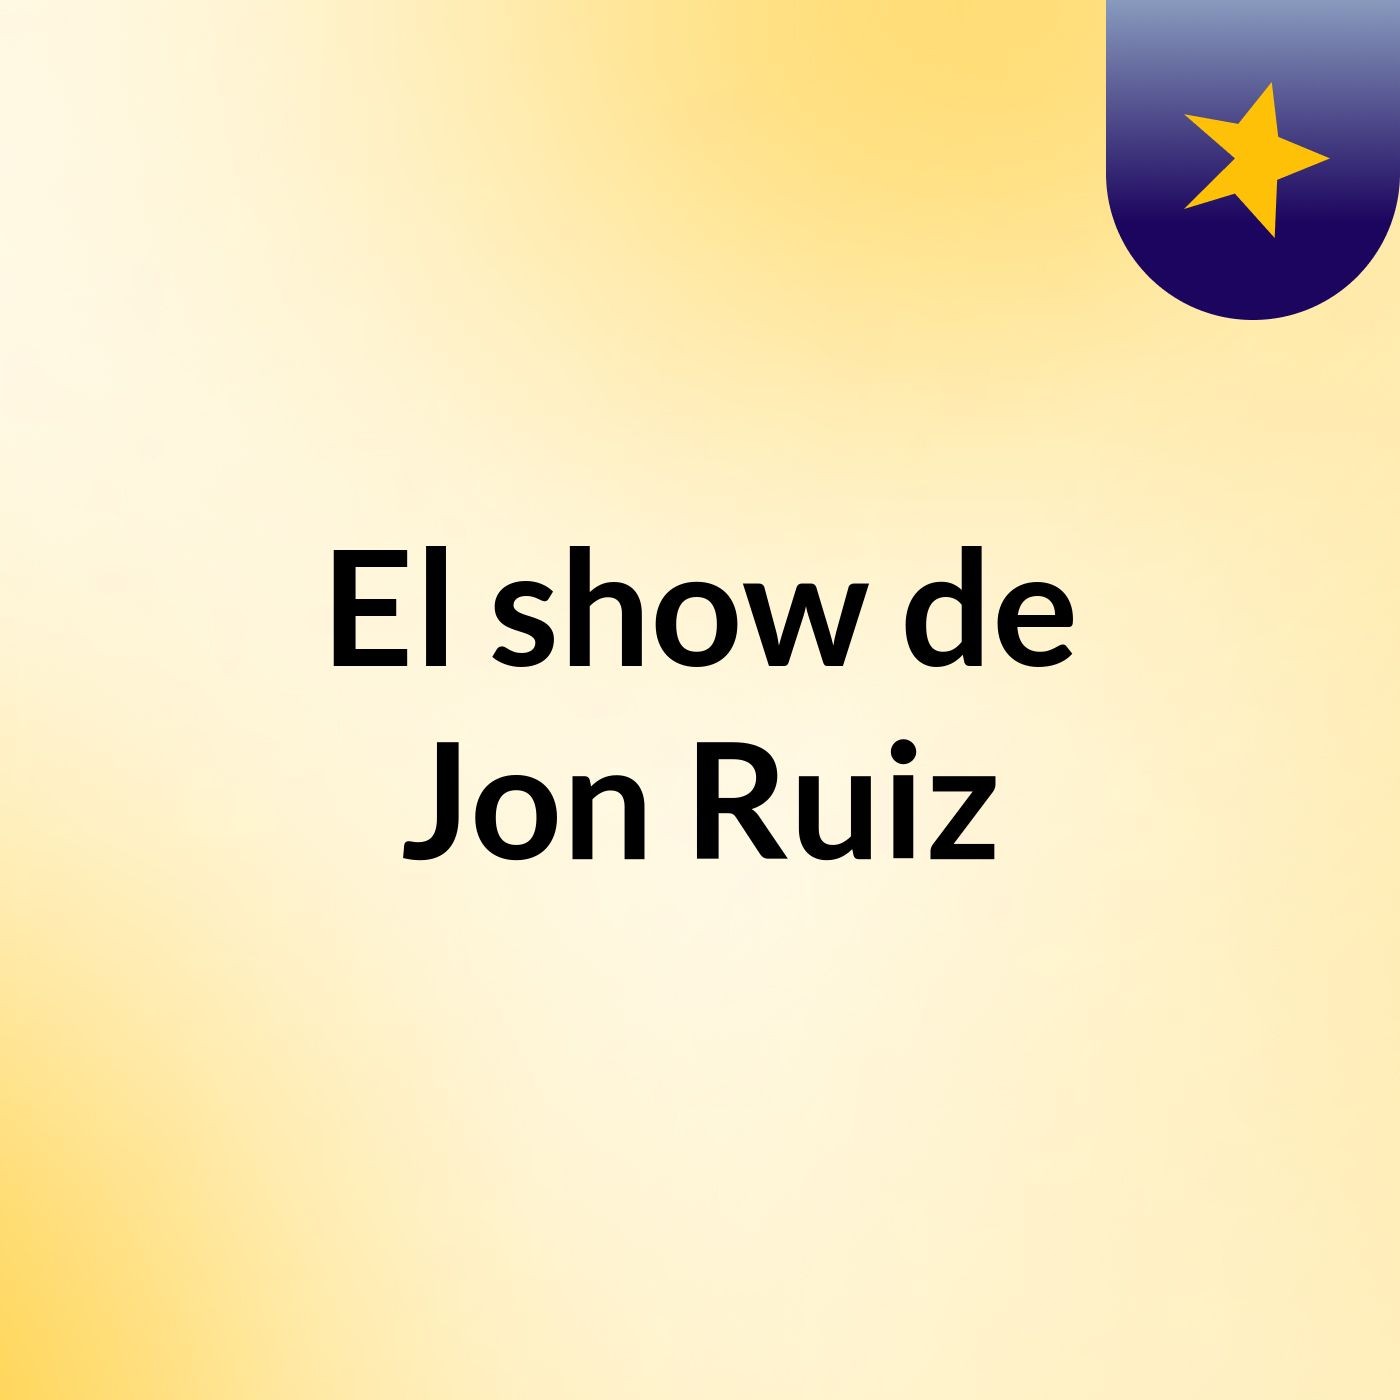 El show de Jon Ruiz